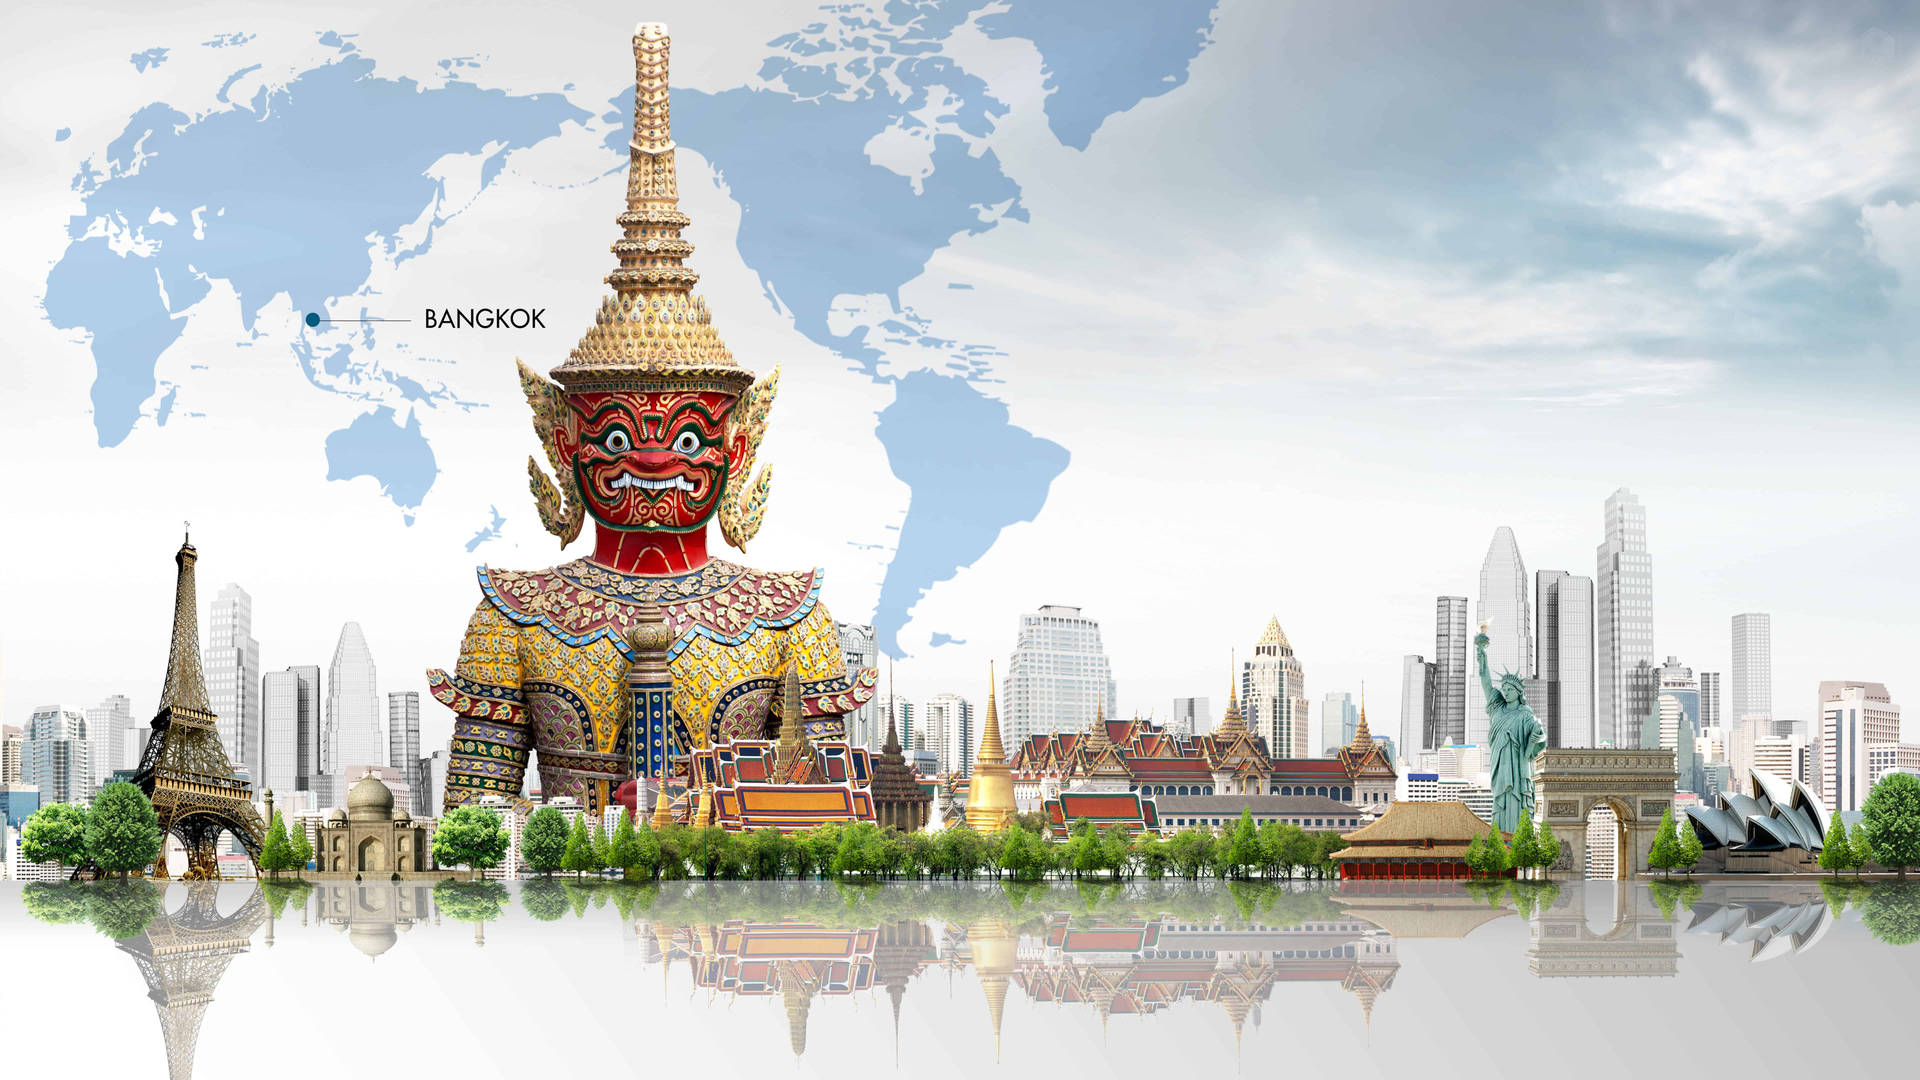 Bangkok City Digital Art Wallpaper